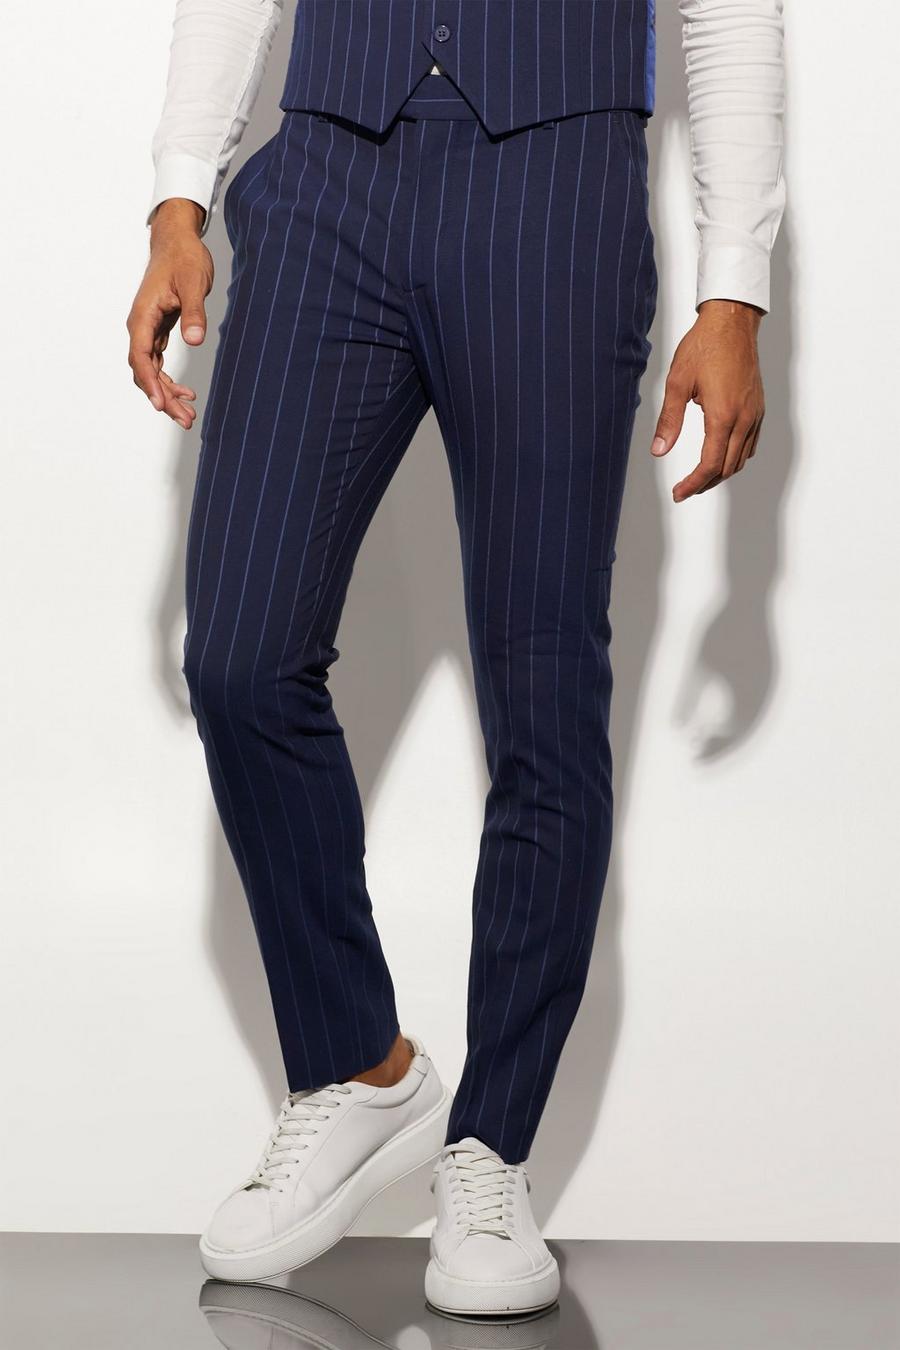 Pantaloni completo Skinny Fit blu navy a righe verticali, Blu oltremare azul marino